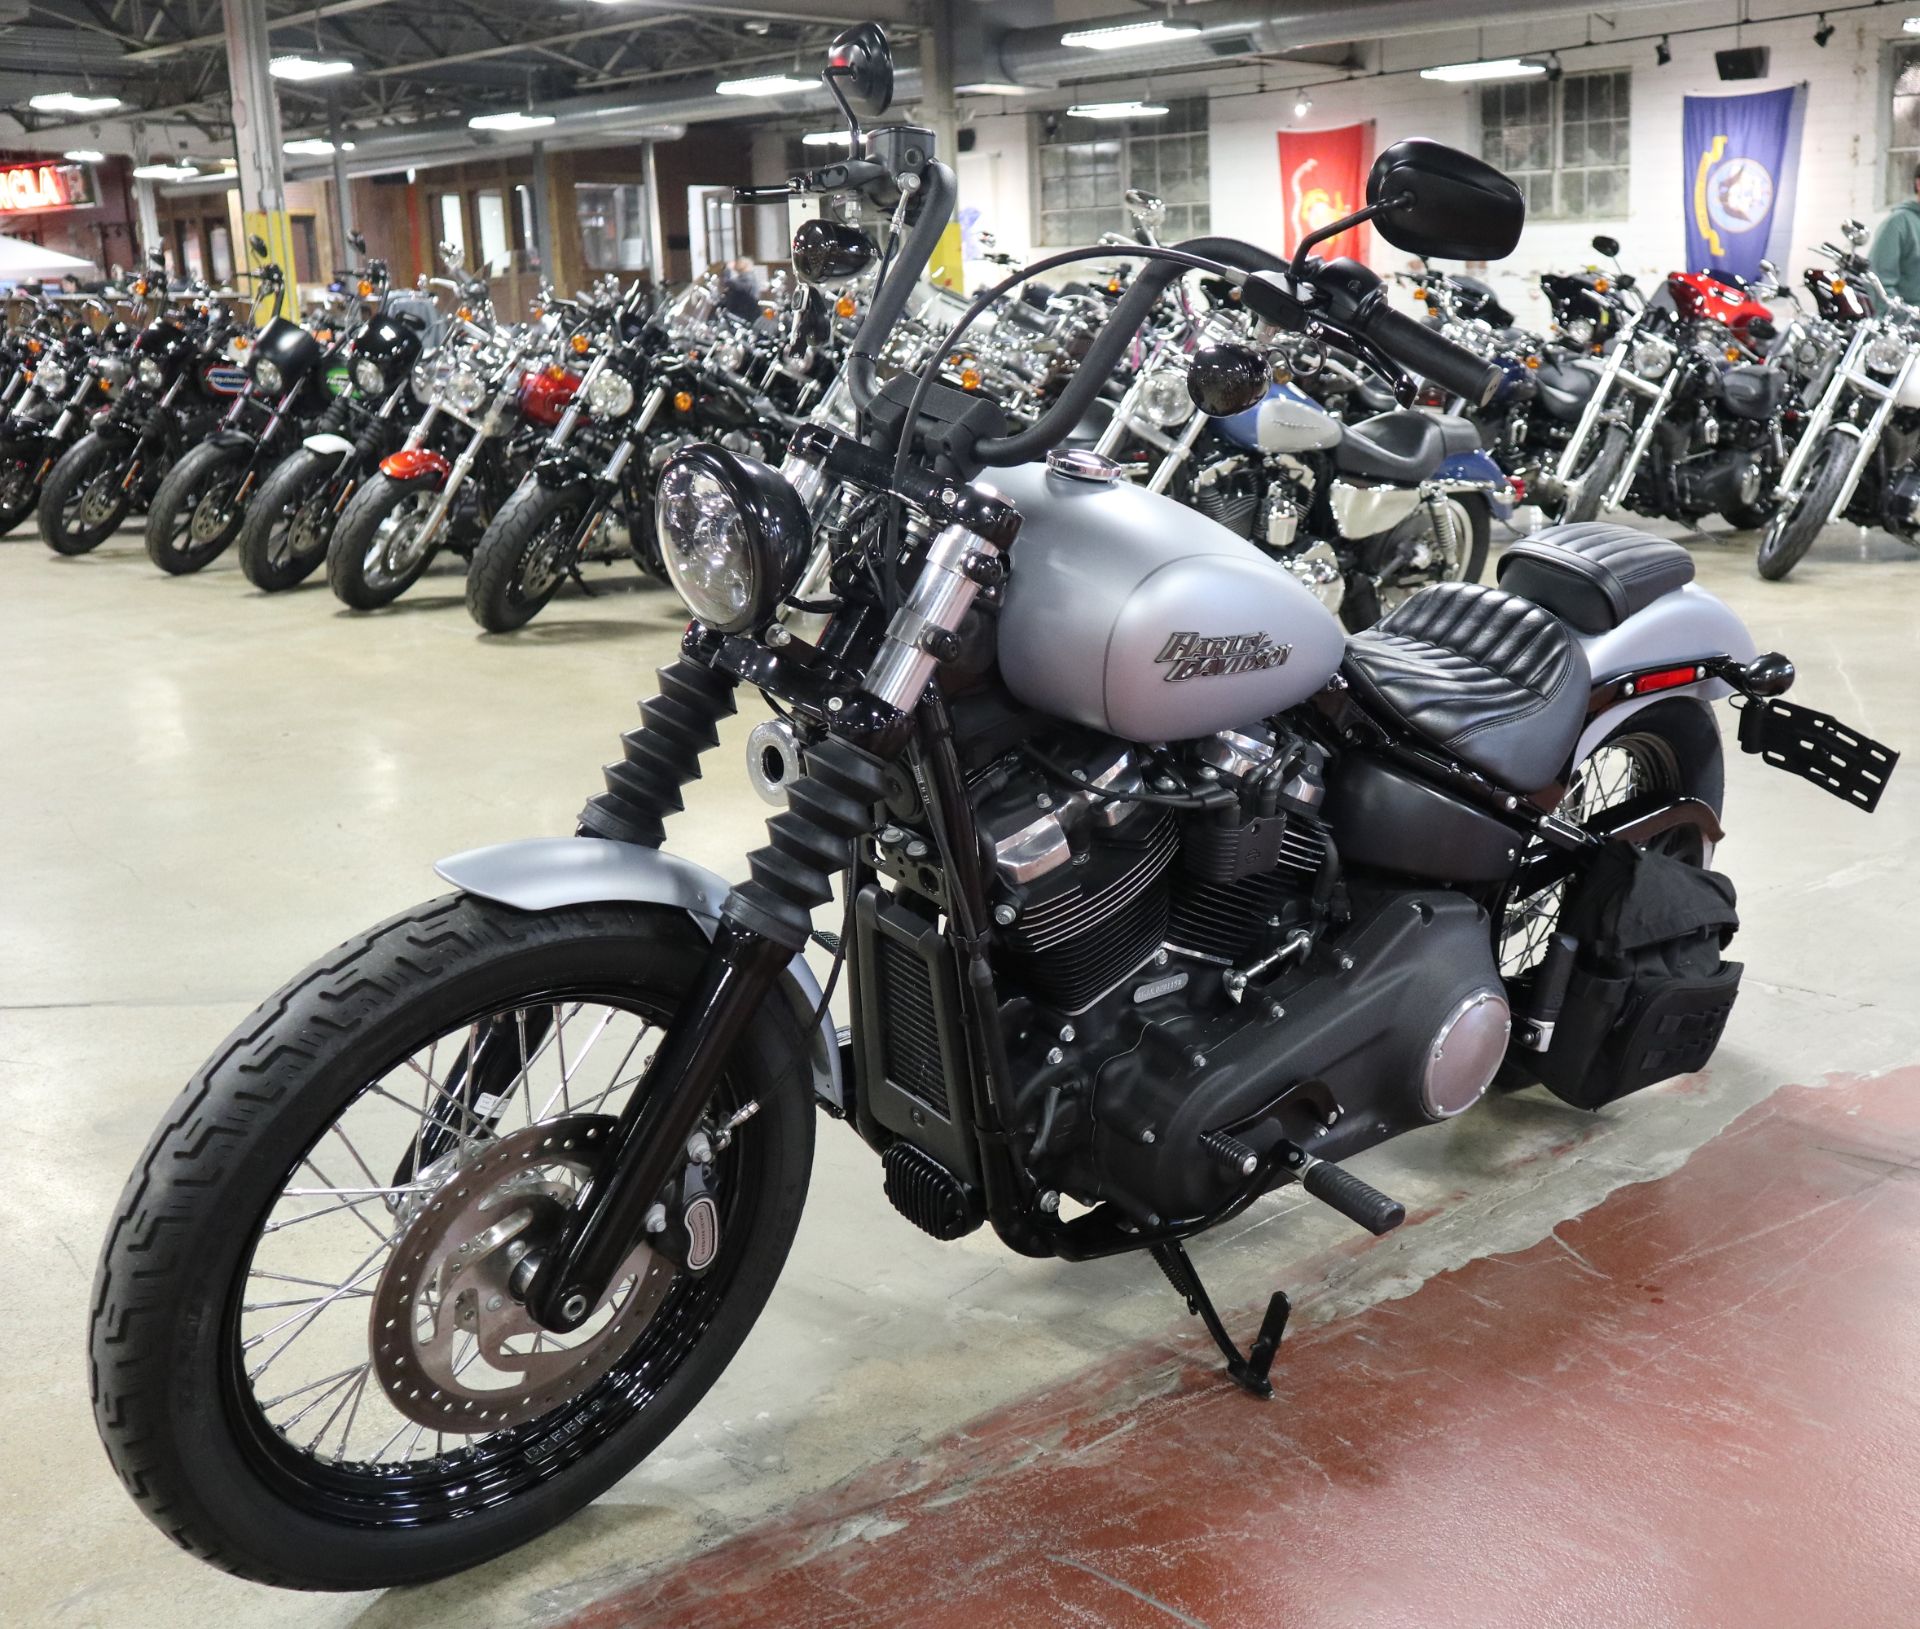 2020 Harley-Davidson Street Bob® in New London, Connecticut - Photo 5